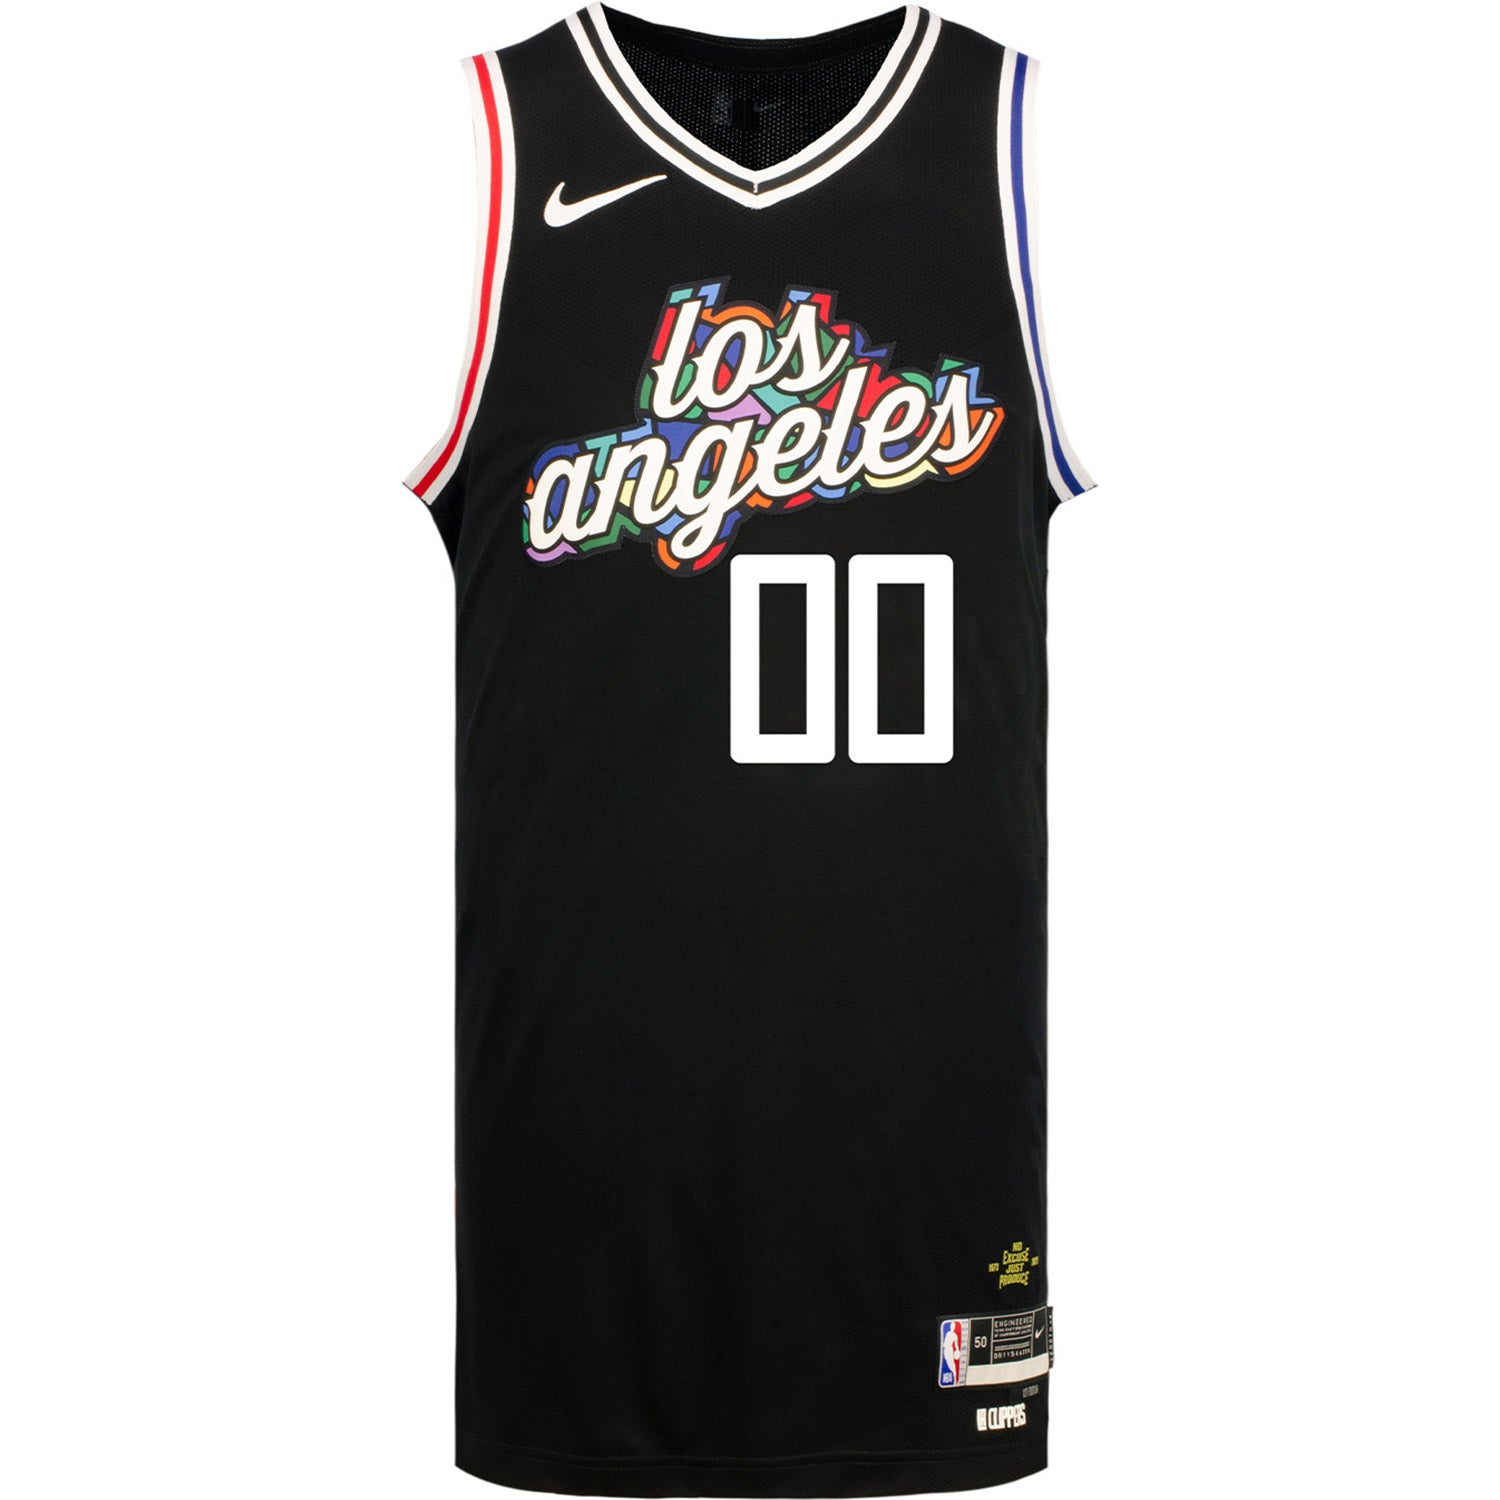 La Clippers 2022-23 La Clippers City Edition Personalized Nike Swingman Jersey